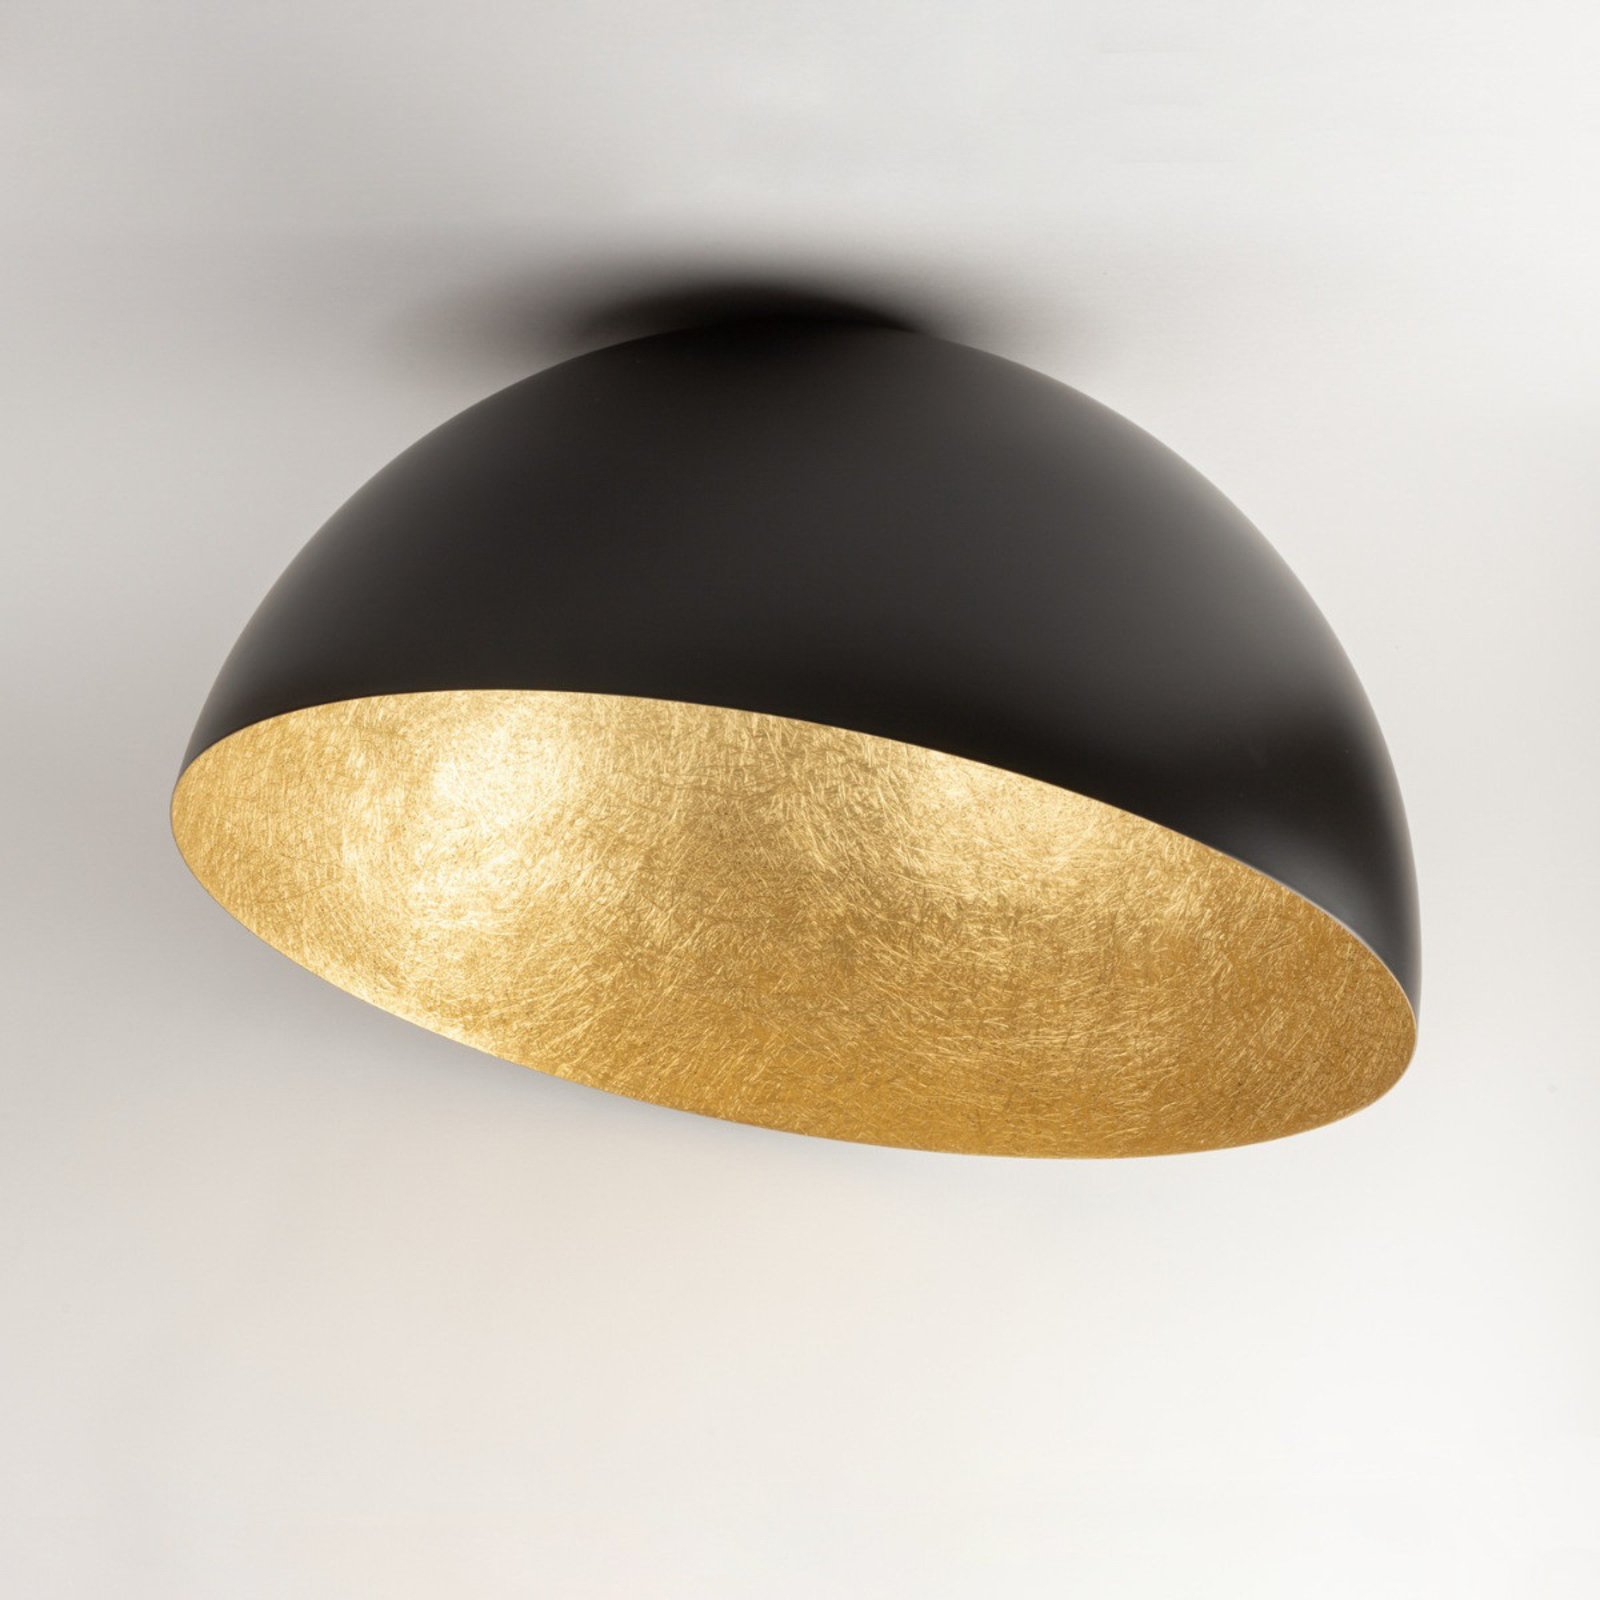 Sfera ceiling light, Ø 50 cm, black/gold